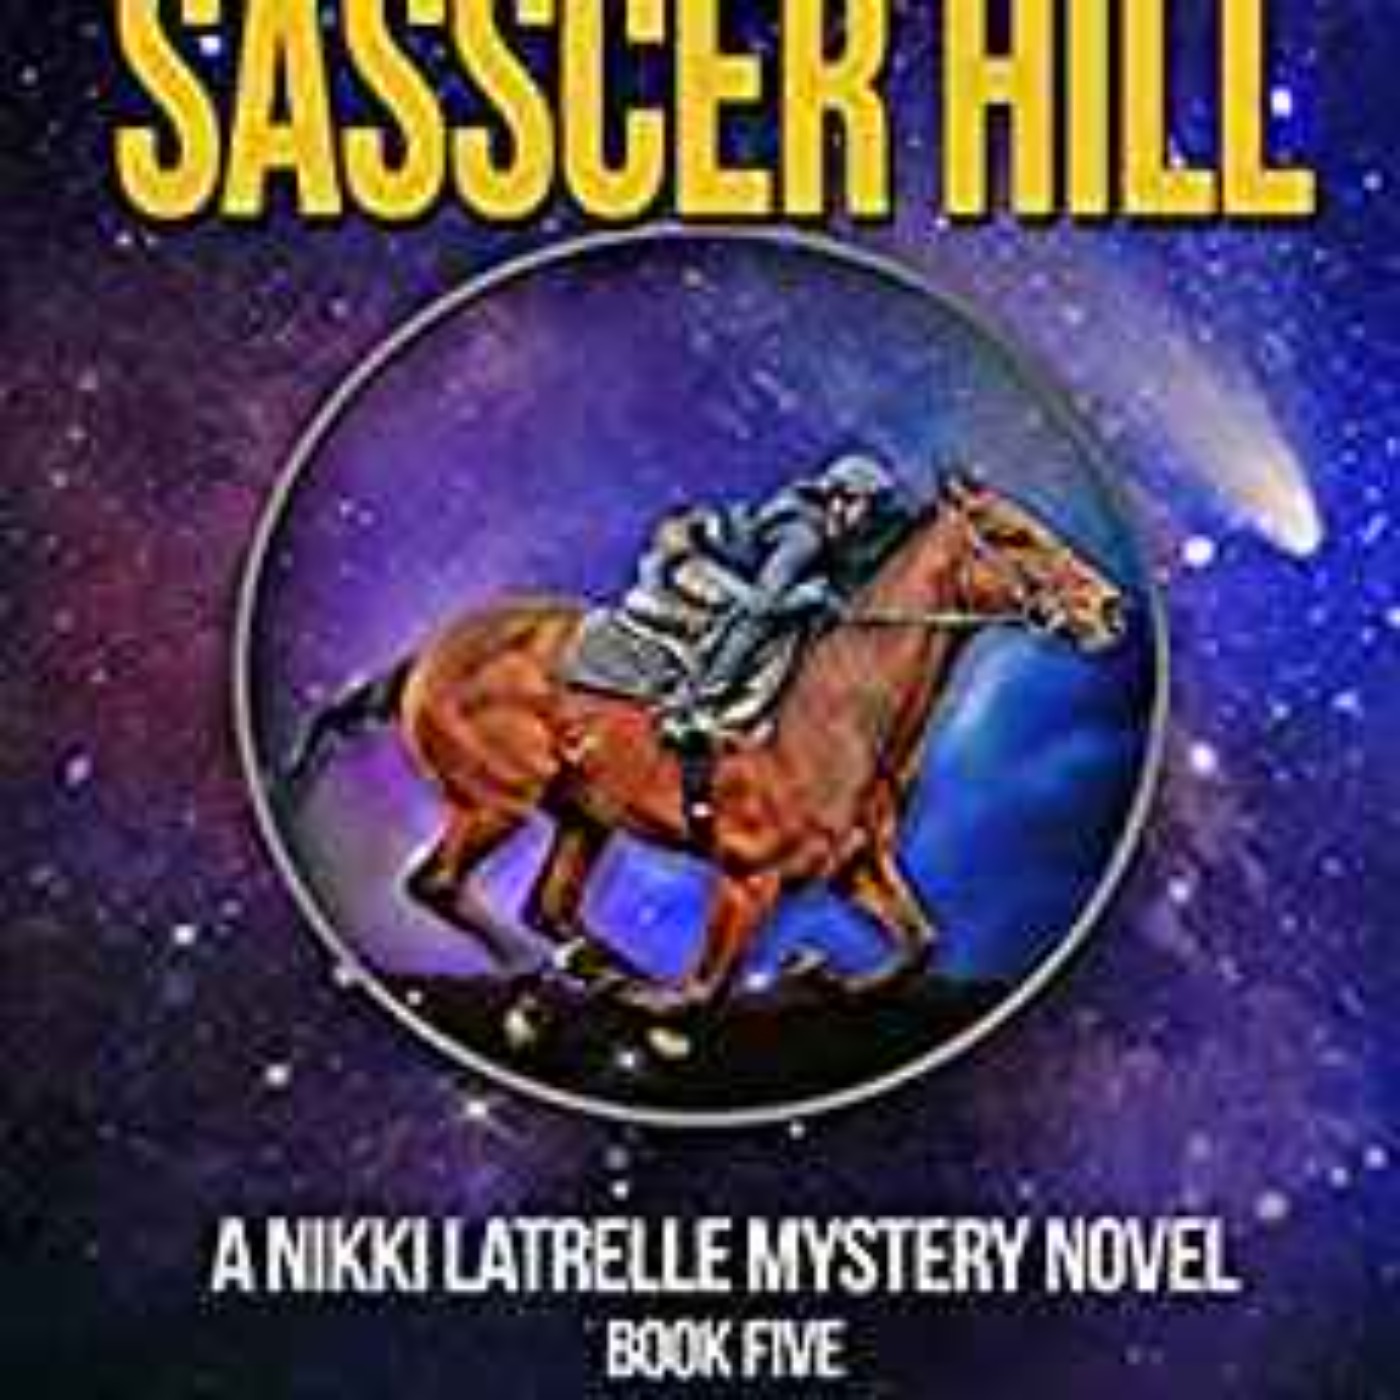 Sasscer Hill - Shooting Star